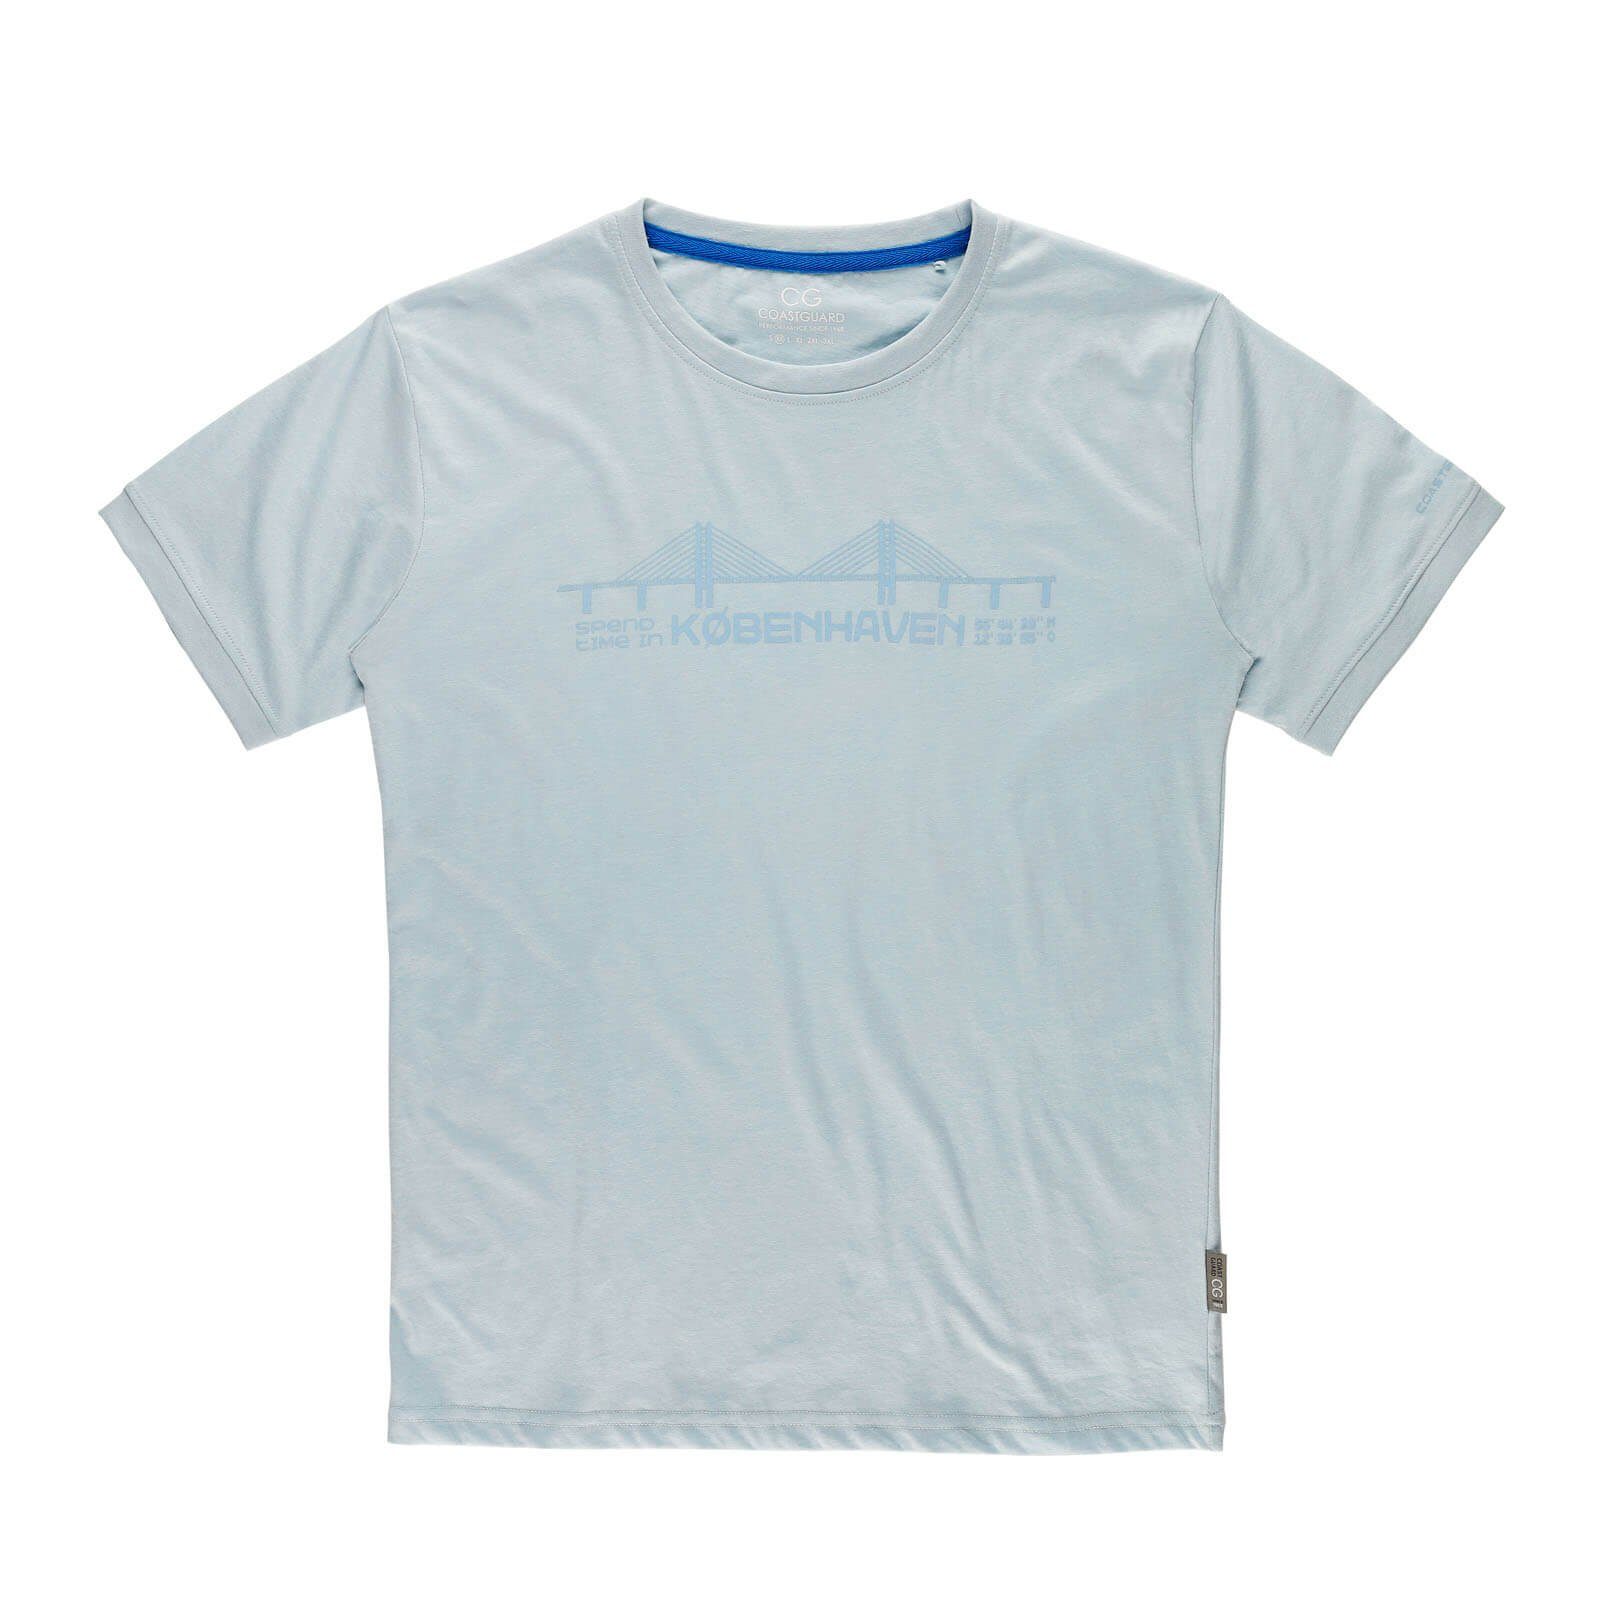 Coastguard T-Shirt Herren T-Shirt Köbenhaven mit Print - Kurzarmshirt aus Baumwolle hellblau